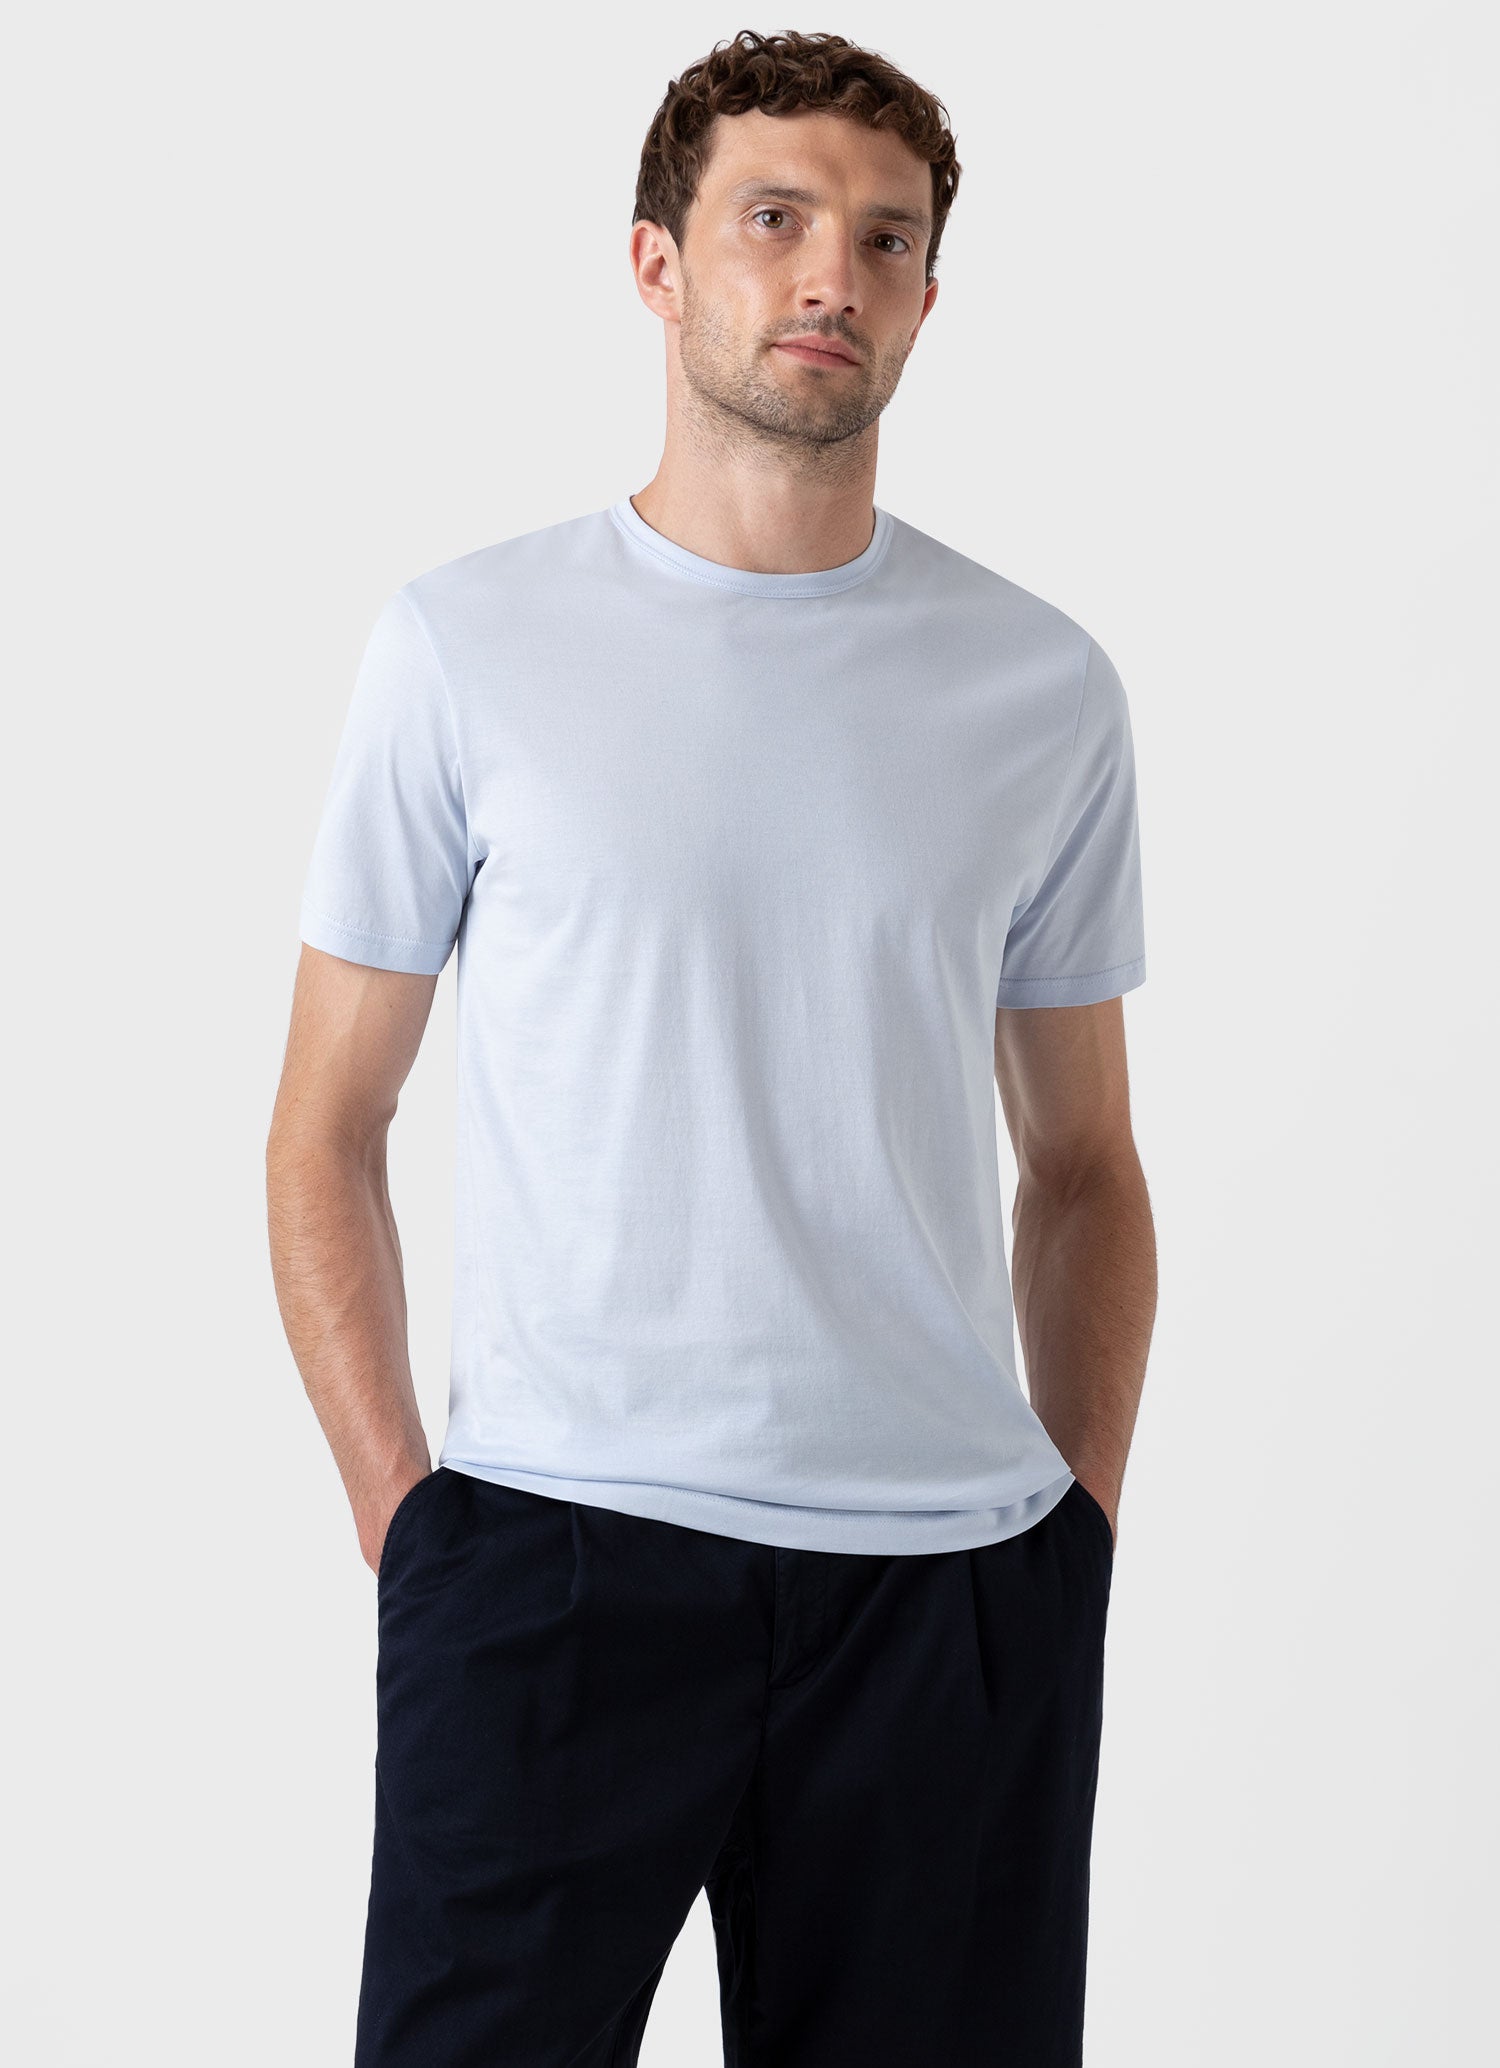 Men's Classic T-shirt in Pastel Blue